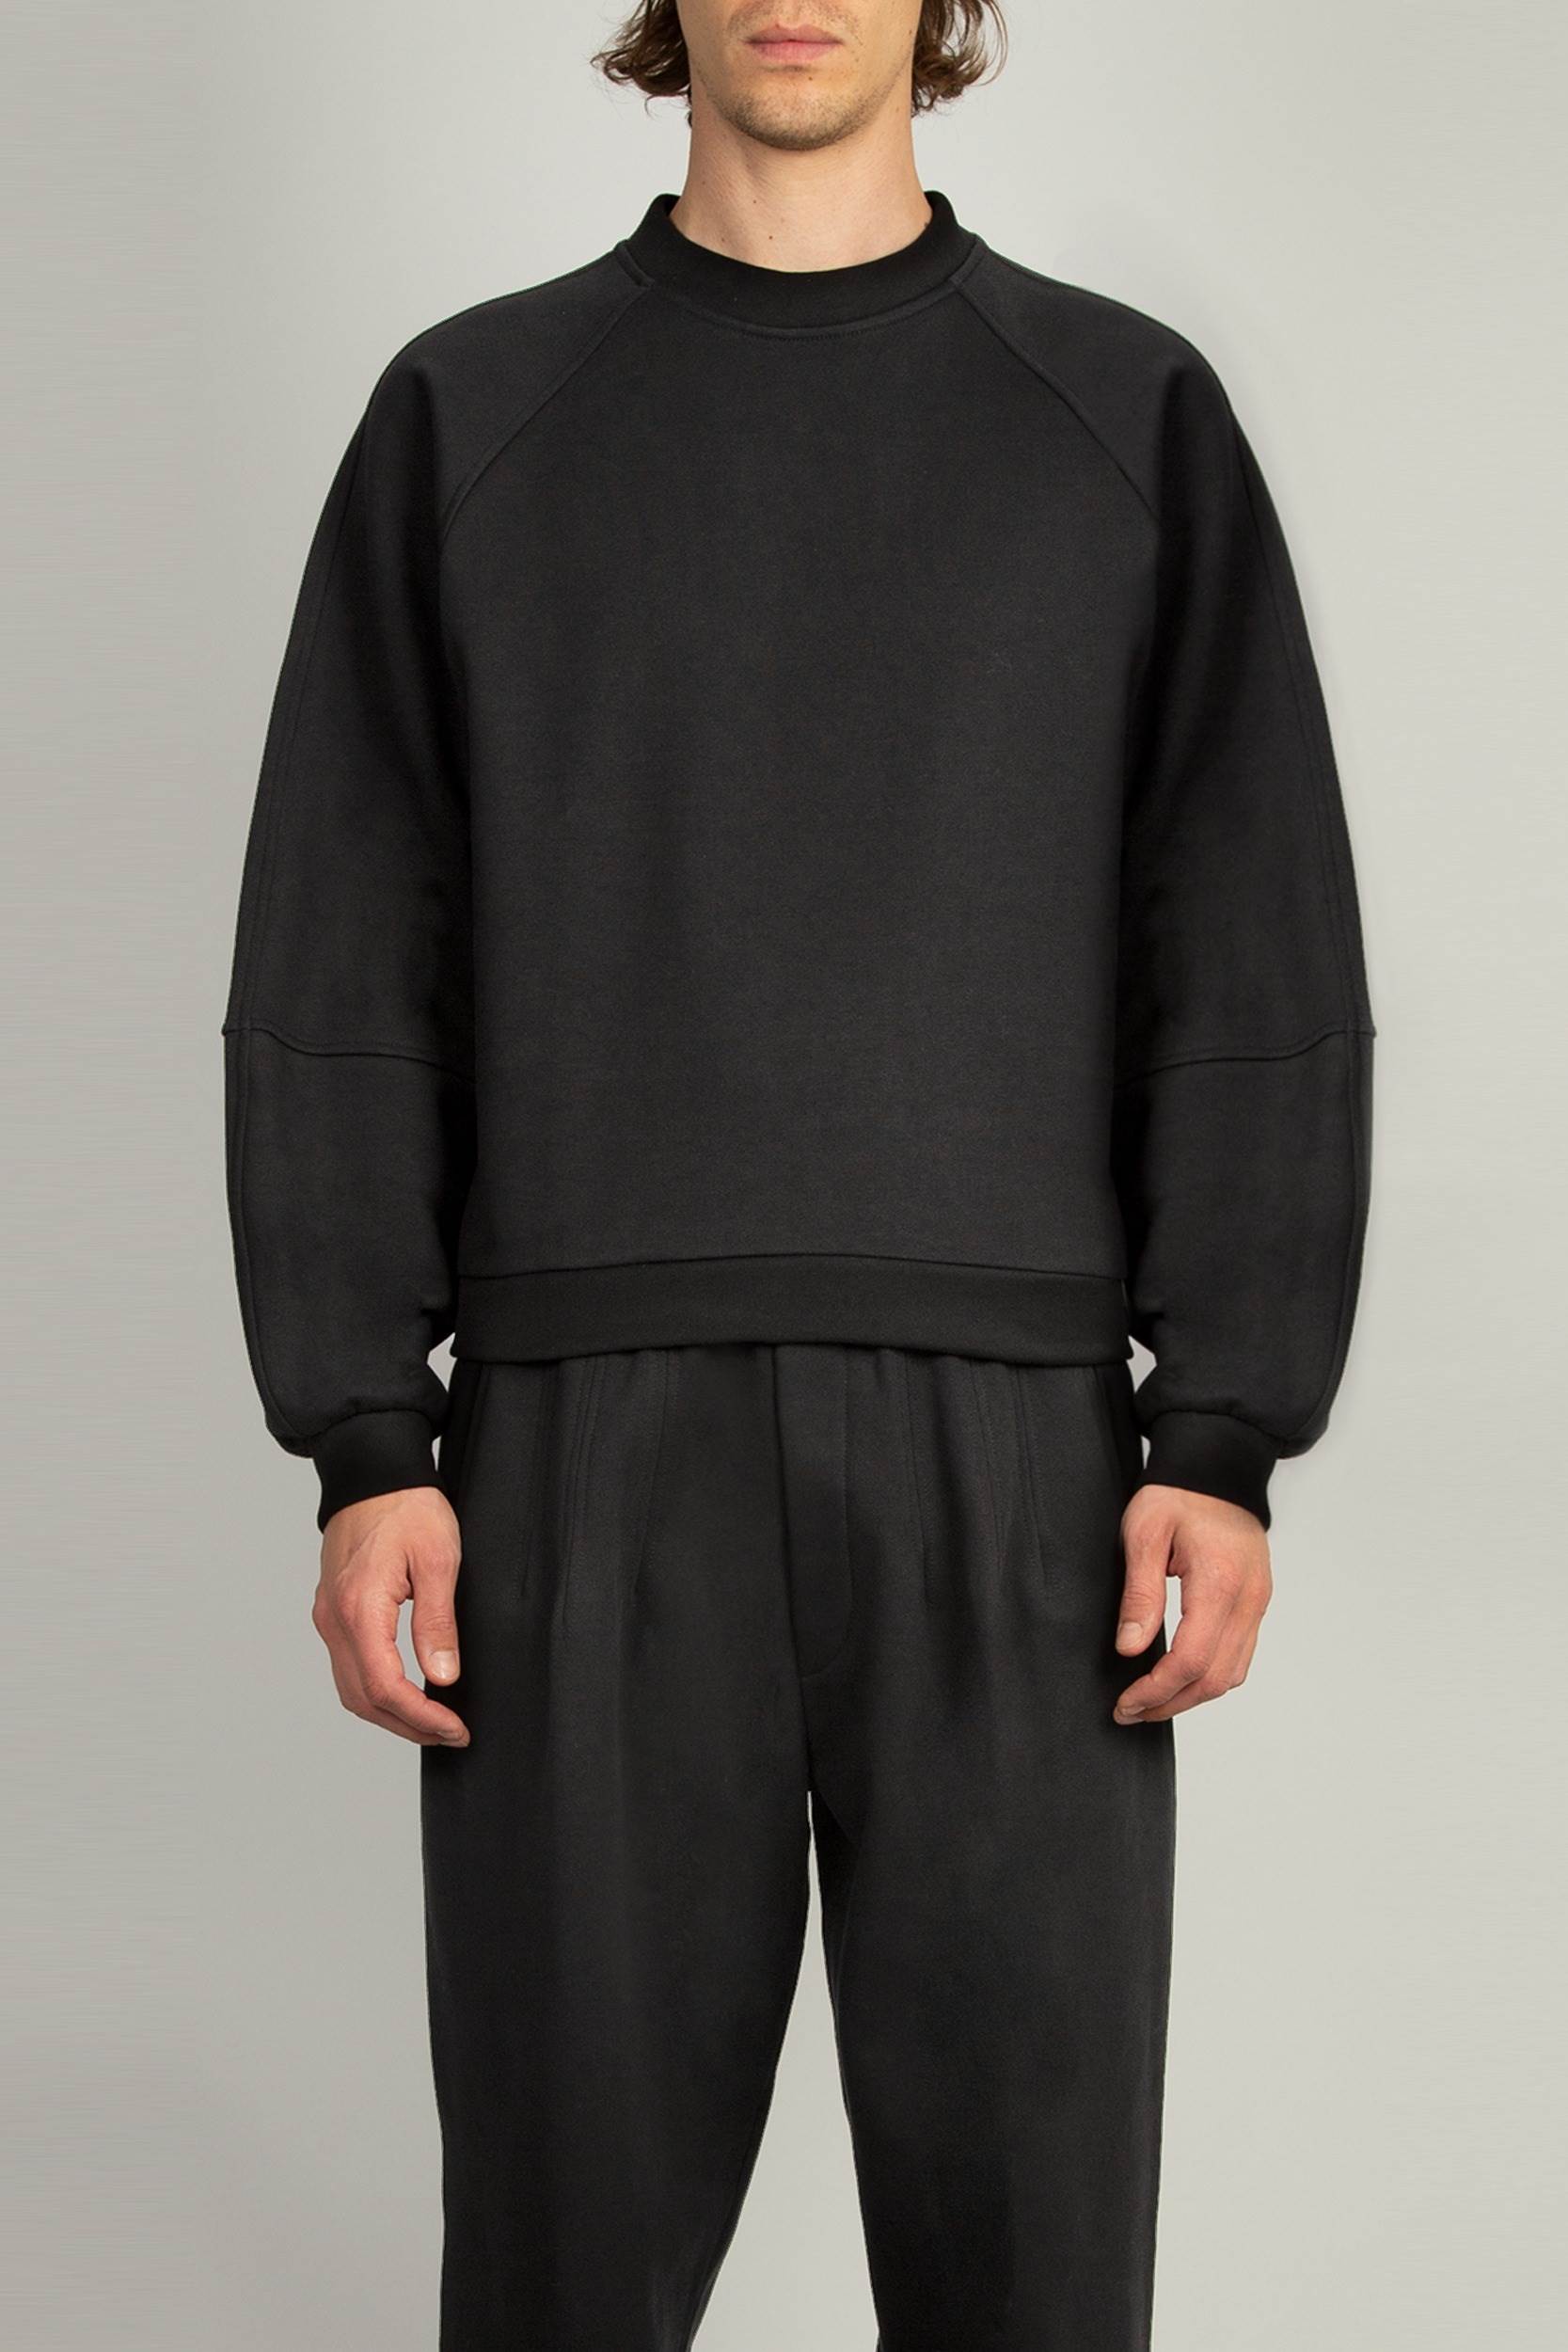 Men's Raglan Sweatshirt - Black - Community Clothing